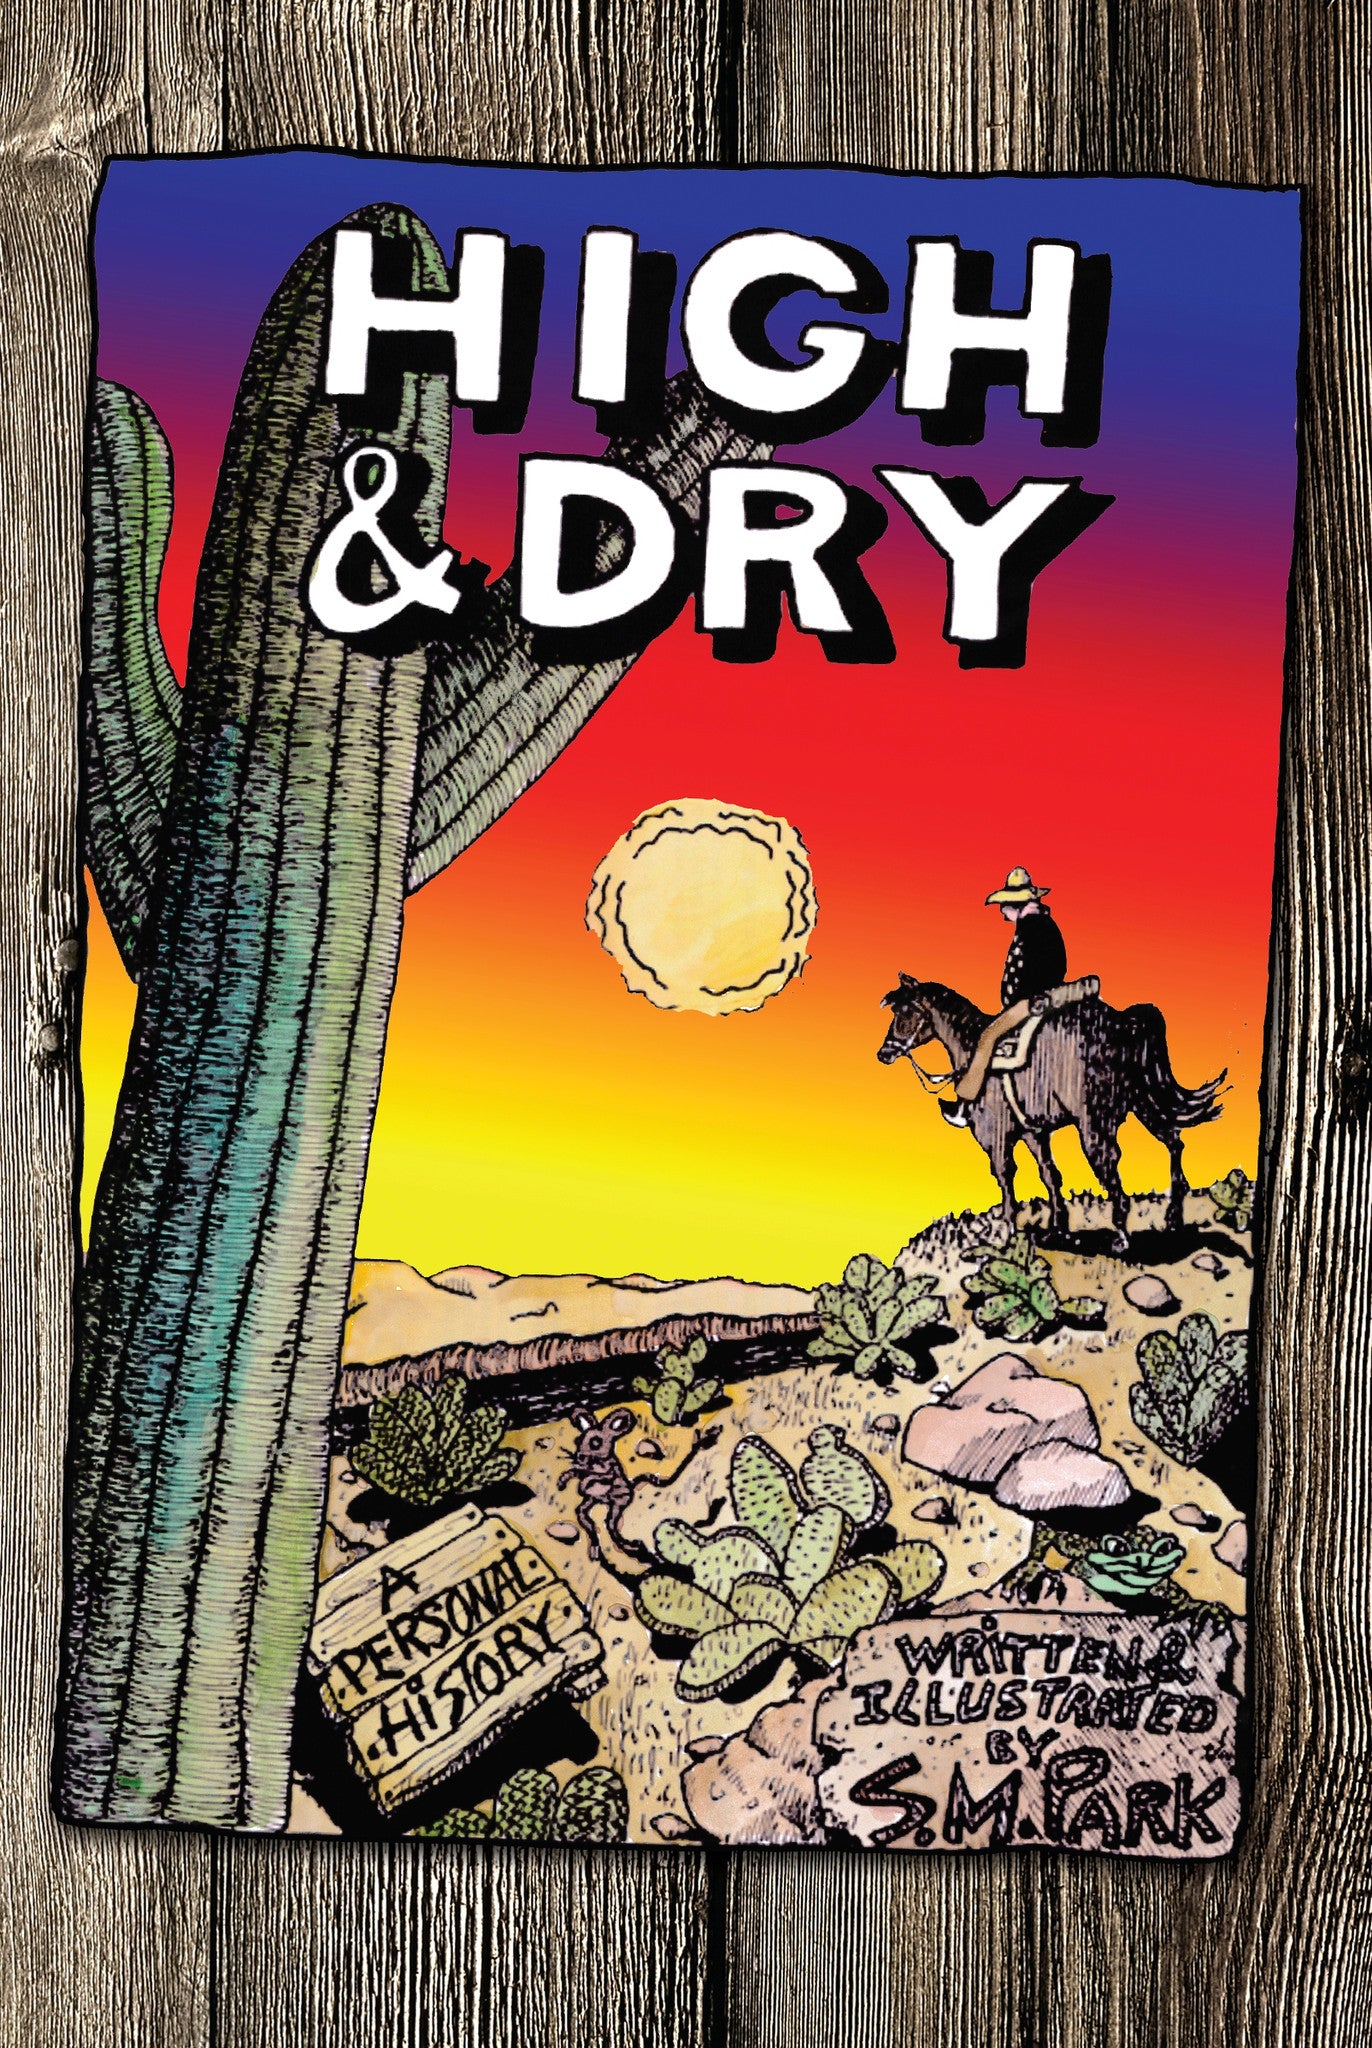 High & Dry by Stephen M. Park